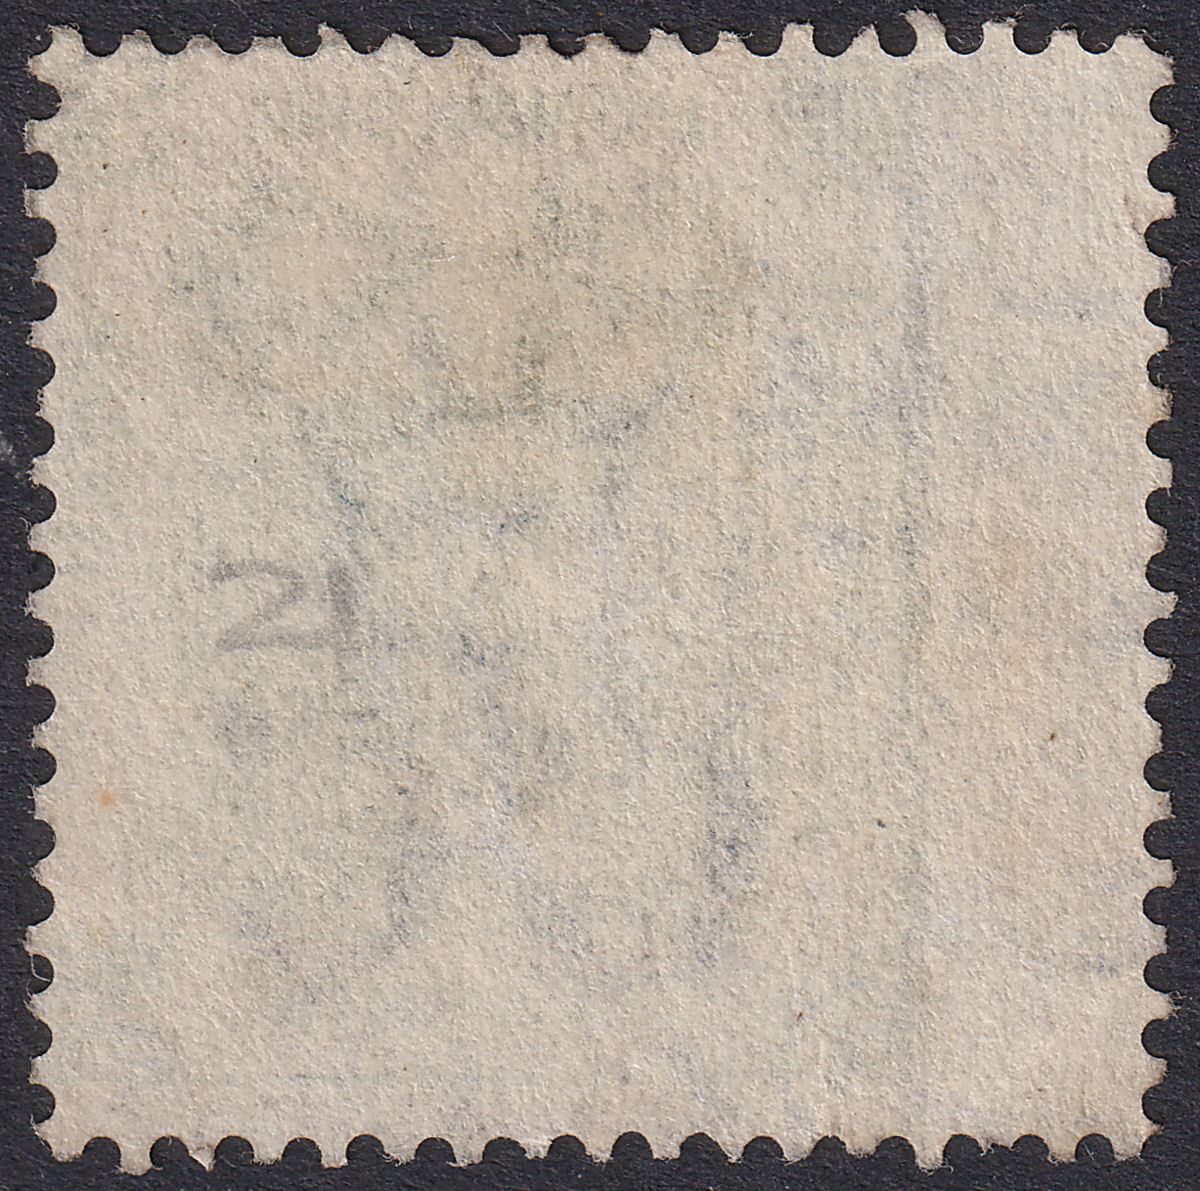 Hong Kong 1863 QV 24c Green Used Blue Foochow F1 Postmark SG Z319 cat £80